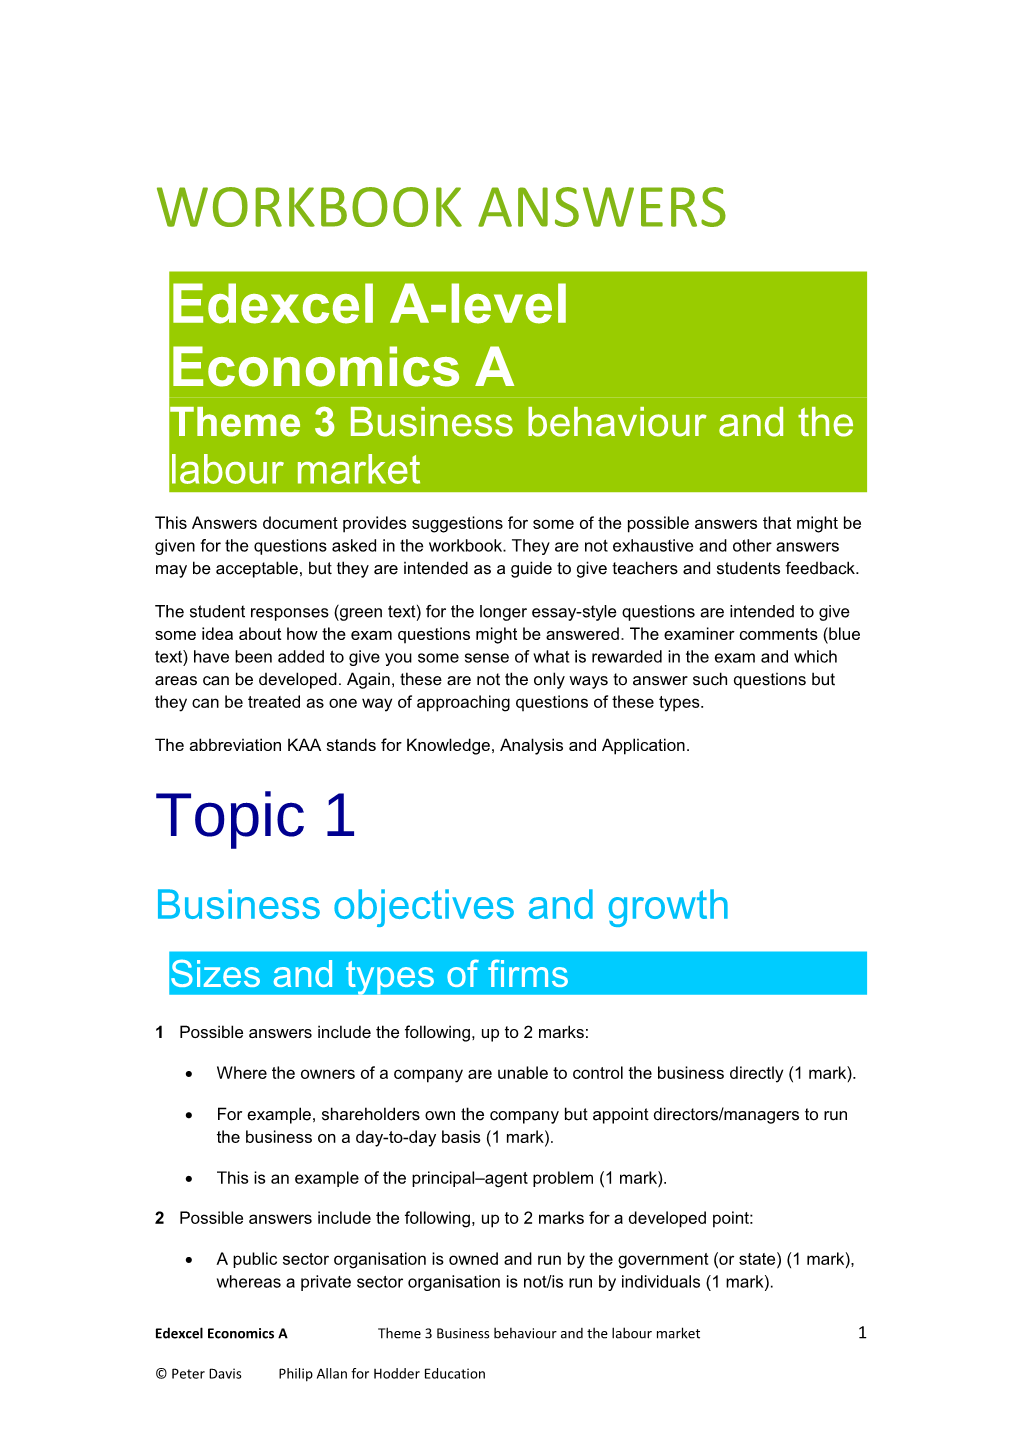 Theme 3 Business Behaviour and the Labour Market